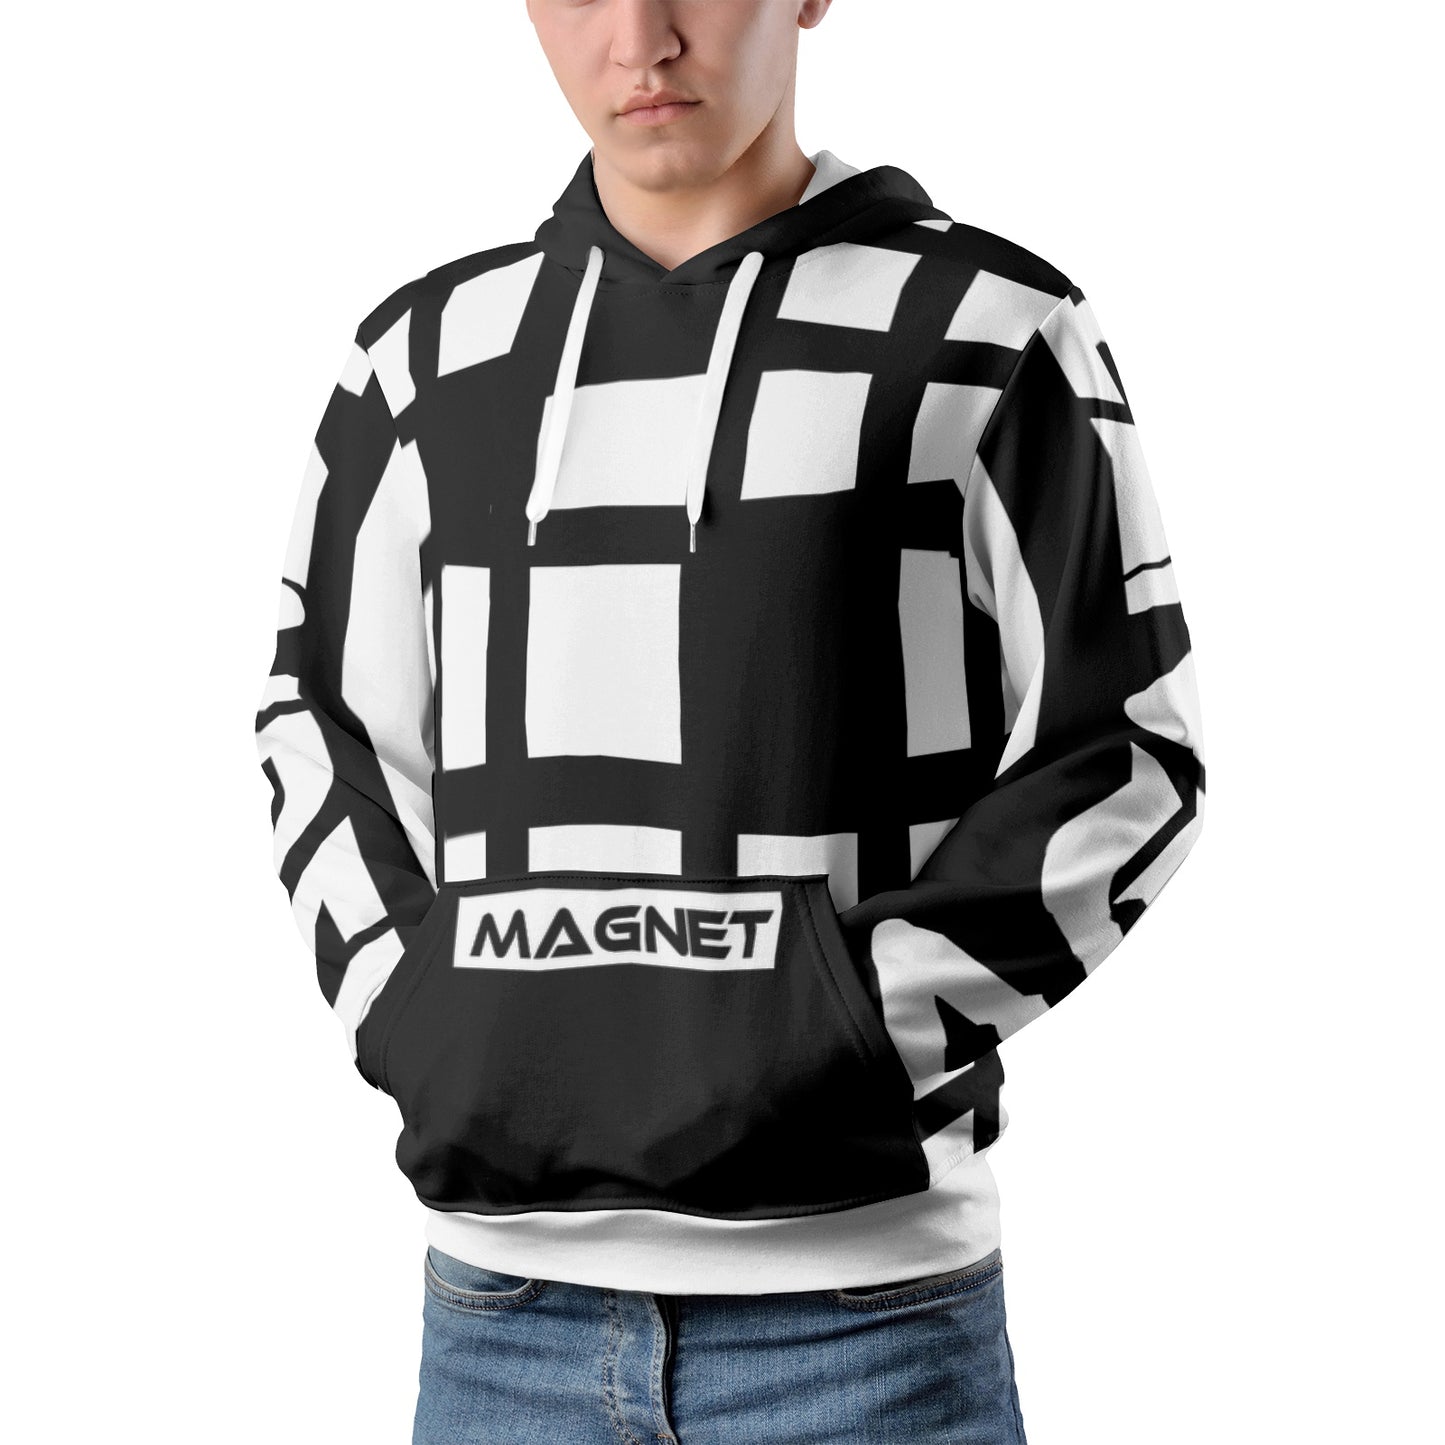 Magnet Grid Men's Pullover Hoodies